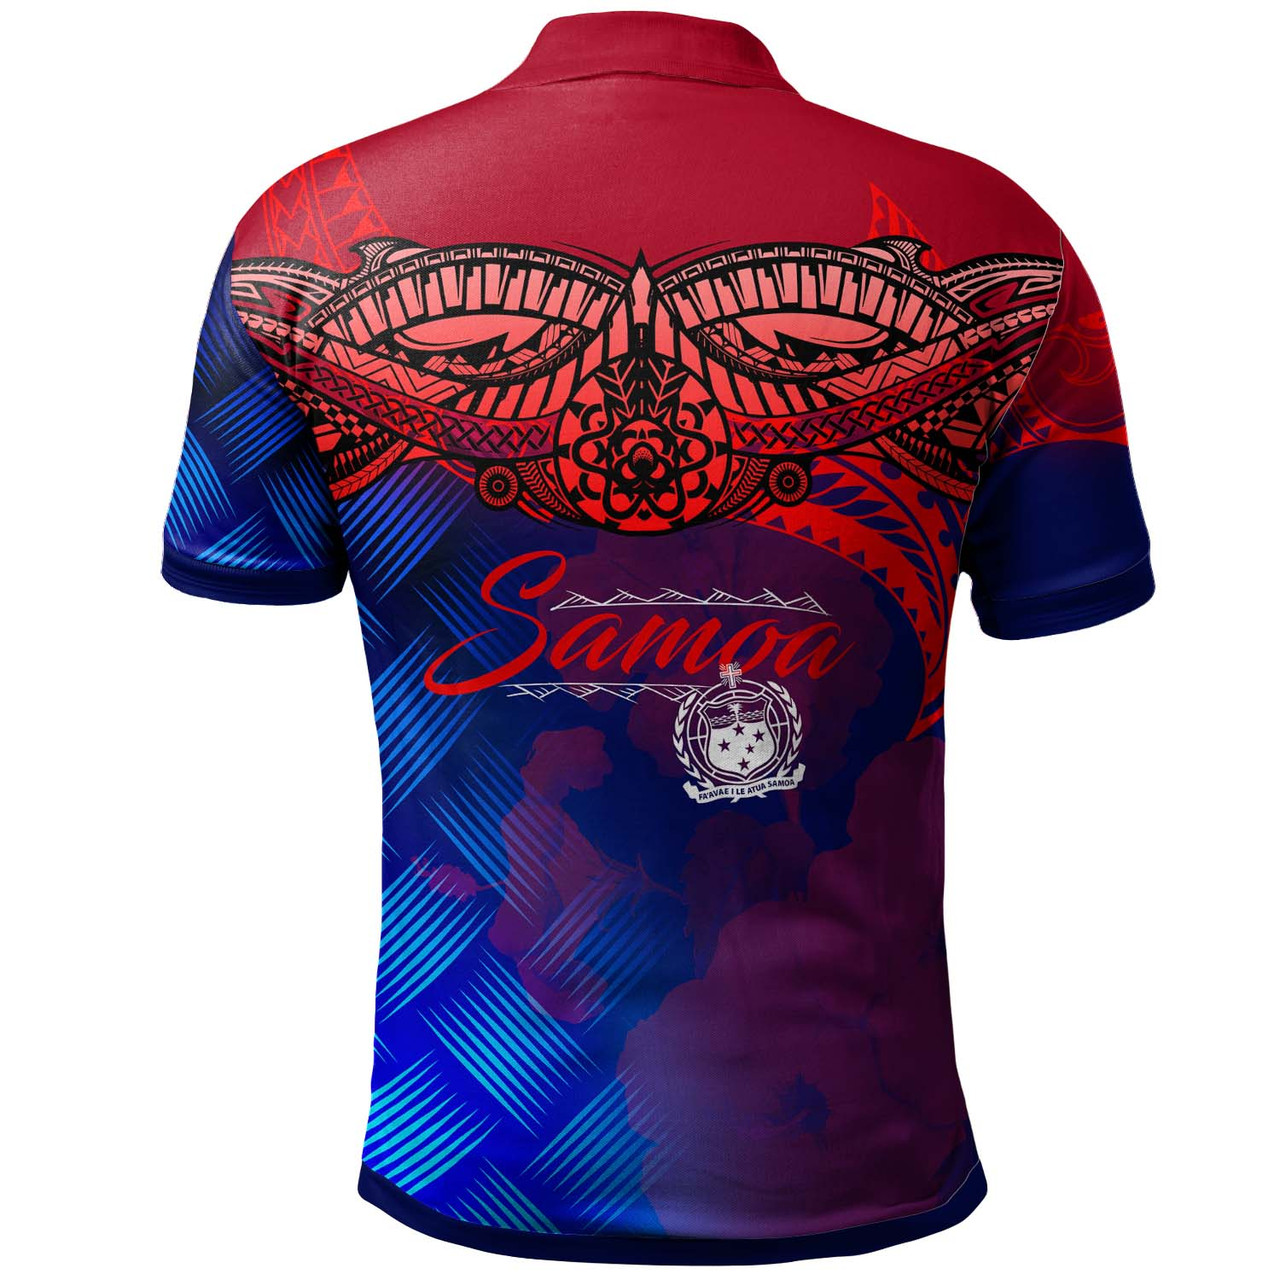 Samoa Polynesian Polo Shirt - Samoa Coat Of Arms with Lauhala Tribal Pattern